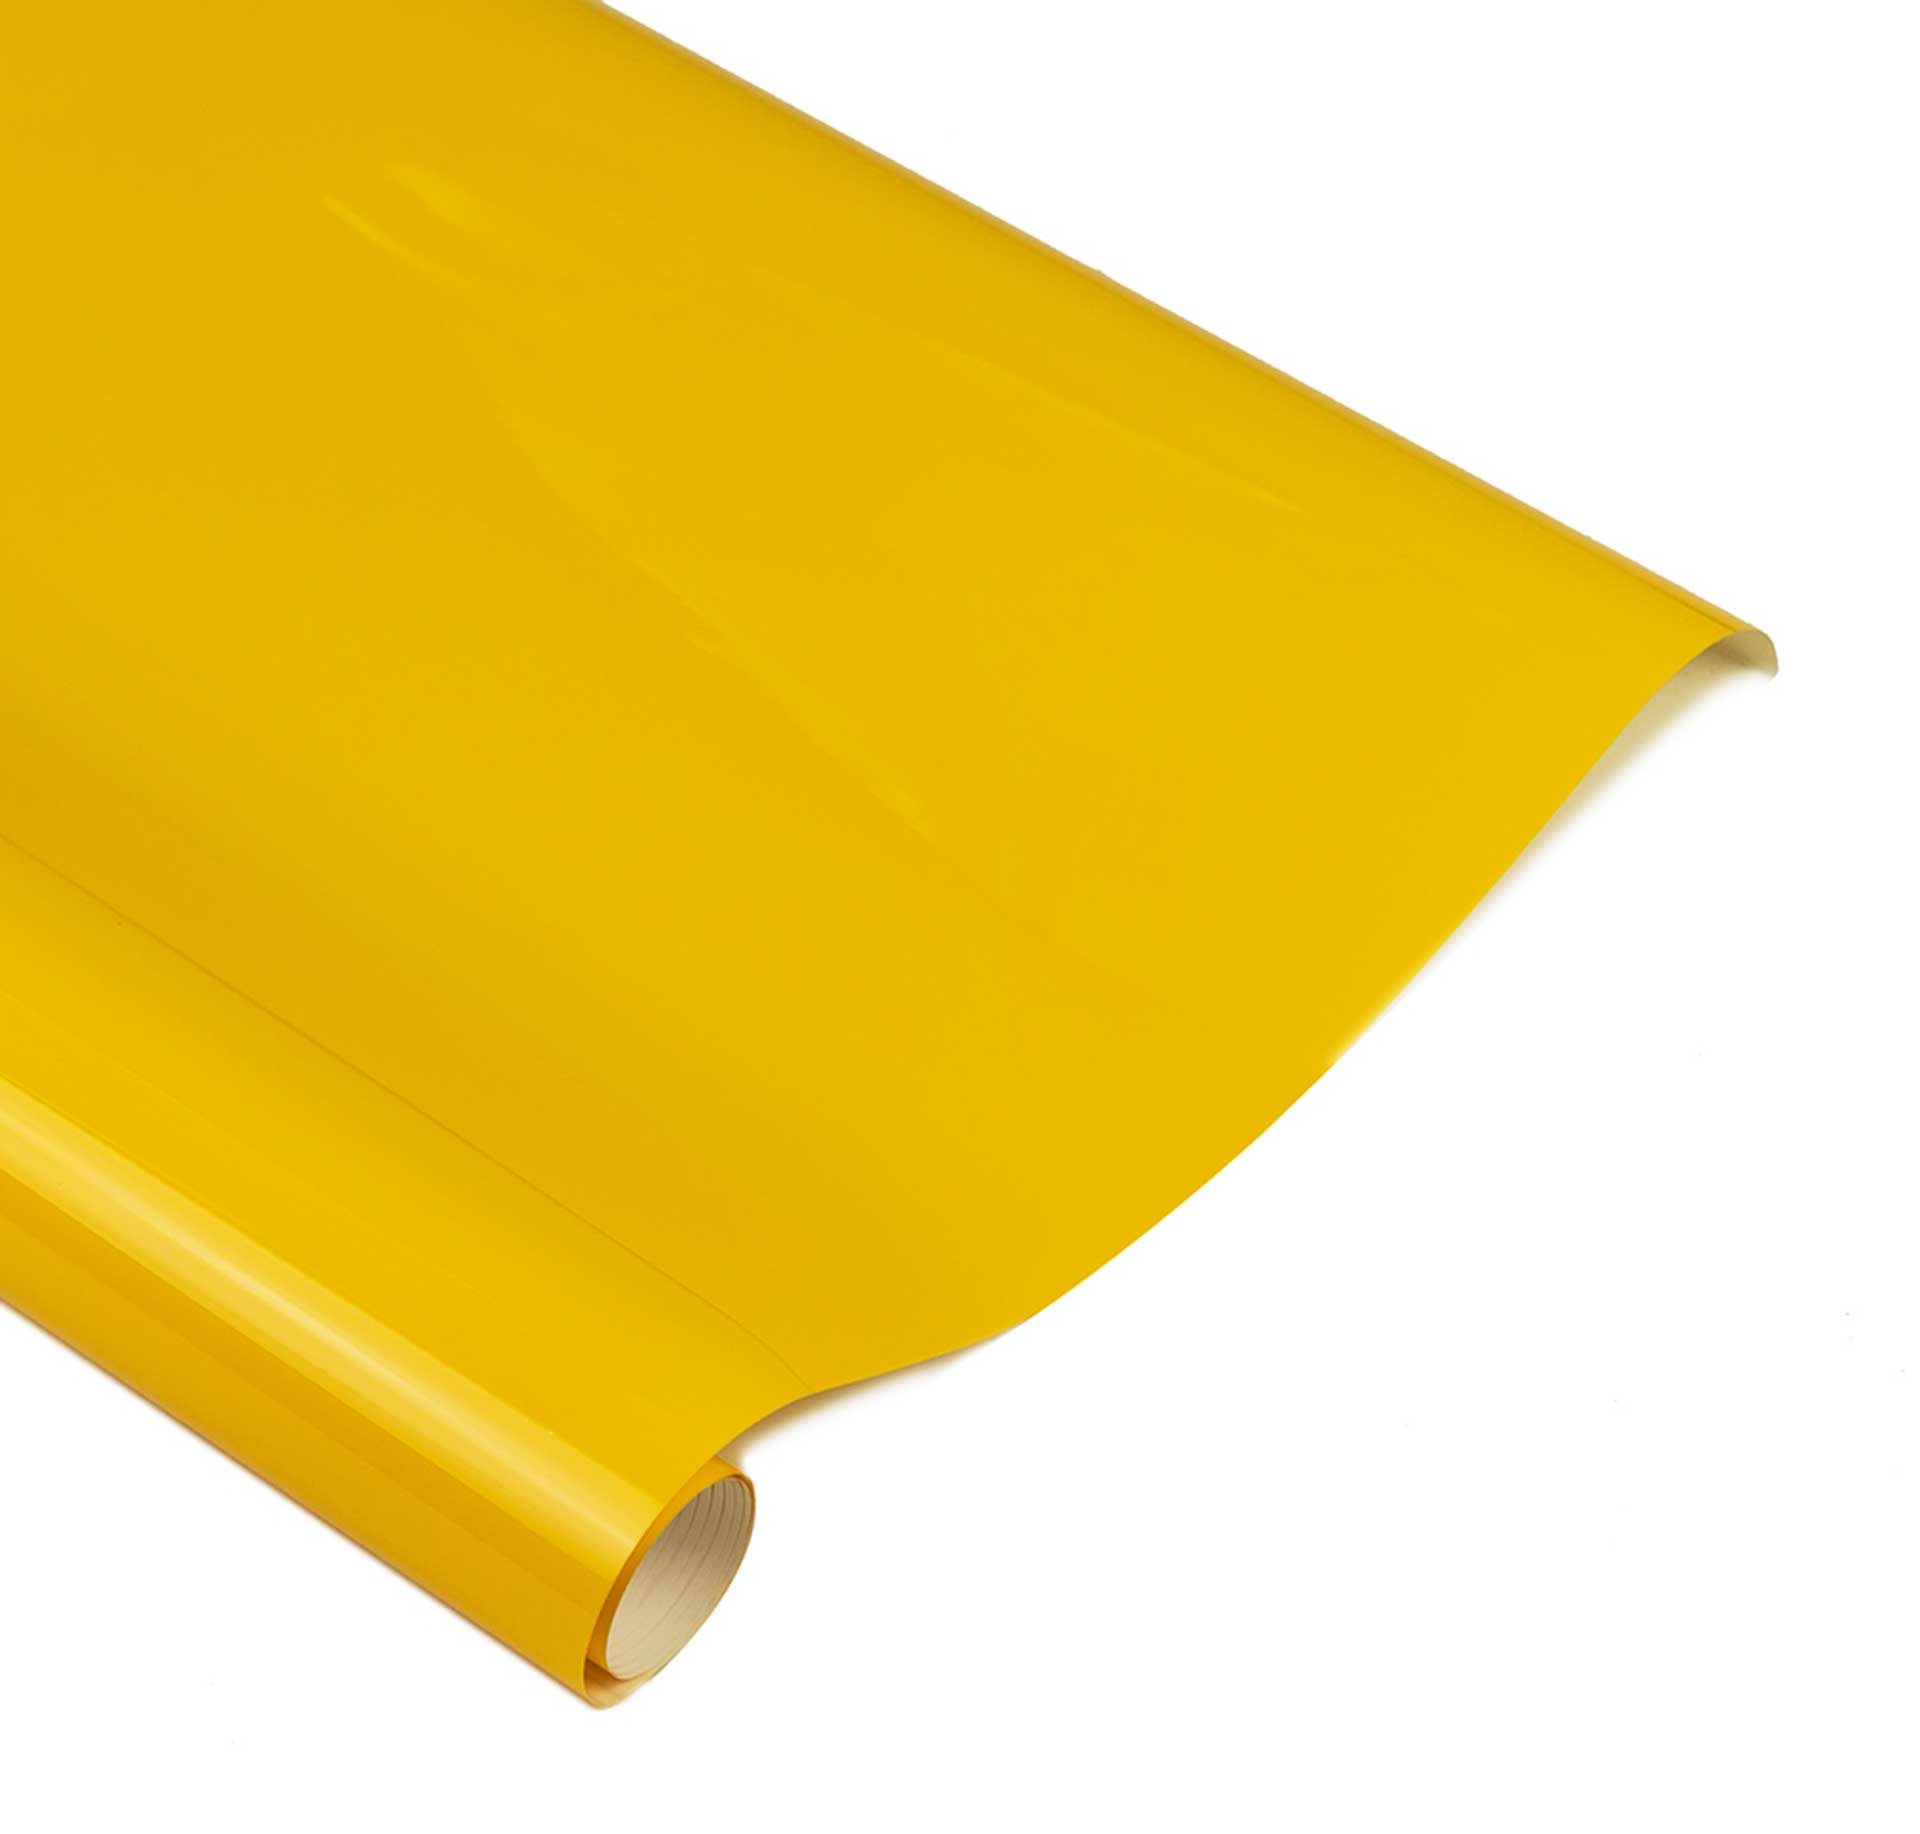 Planet-Hobby Iron-on foil Medium Yellow 5 meters